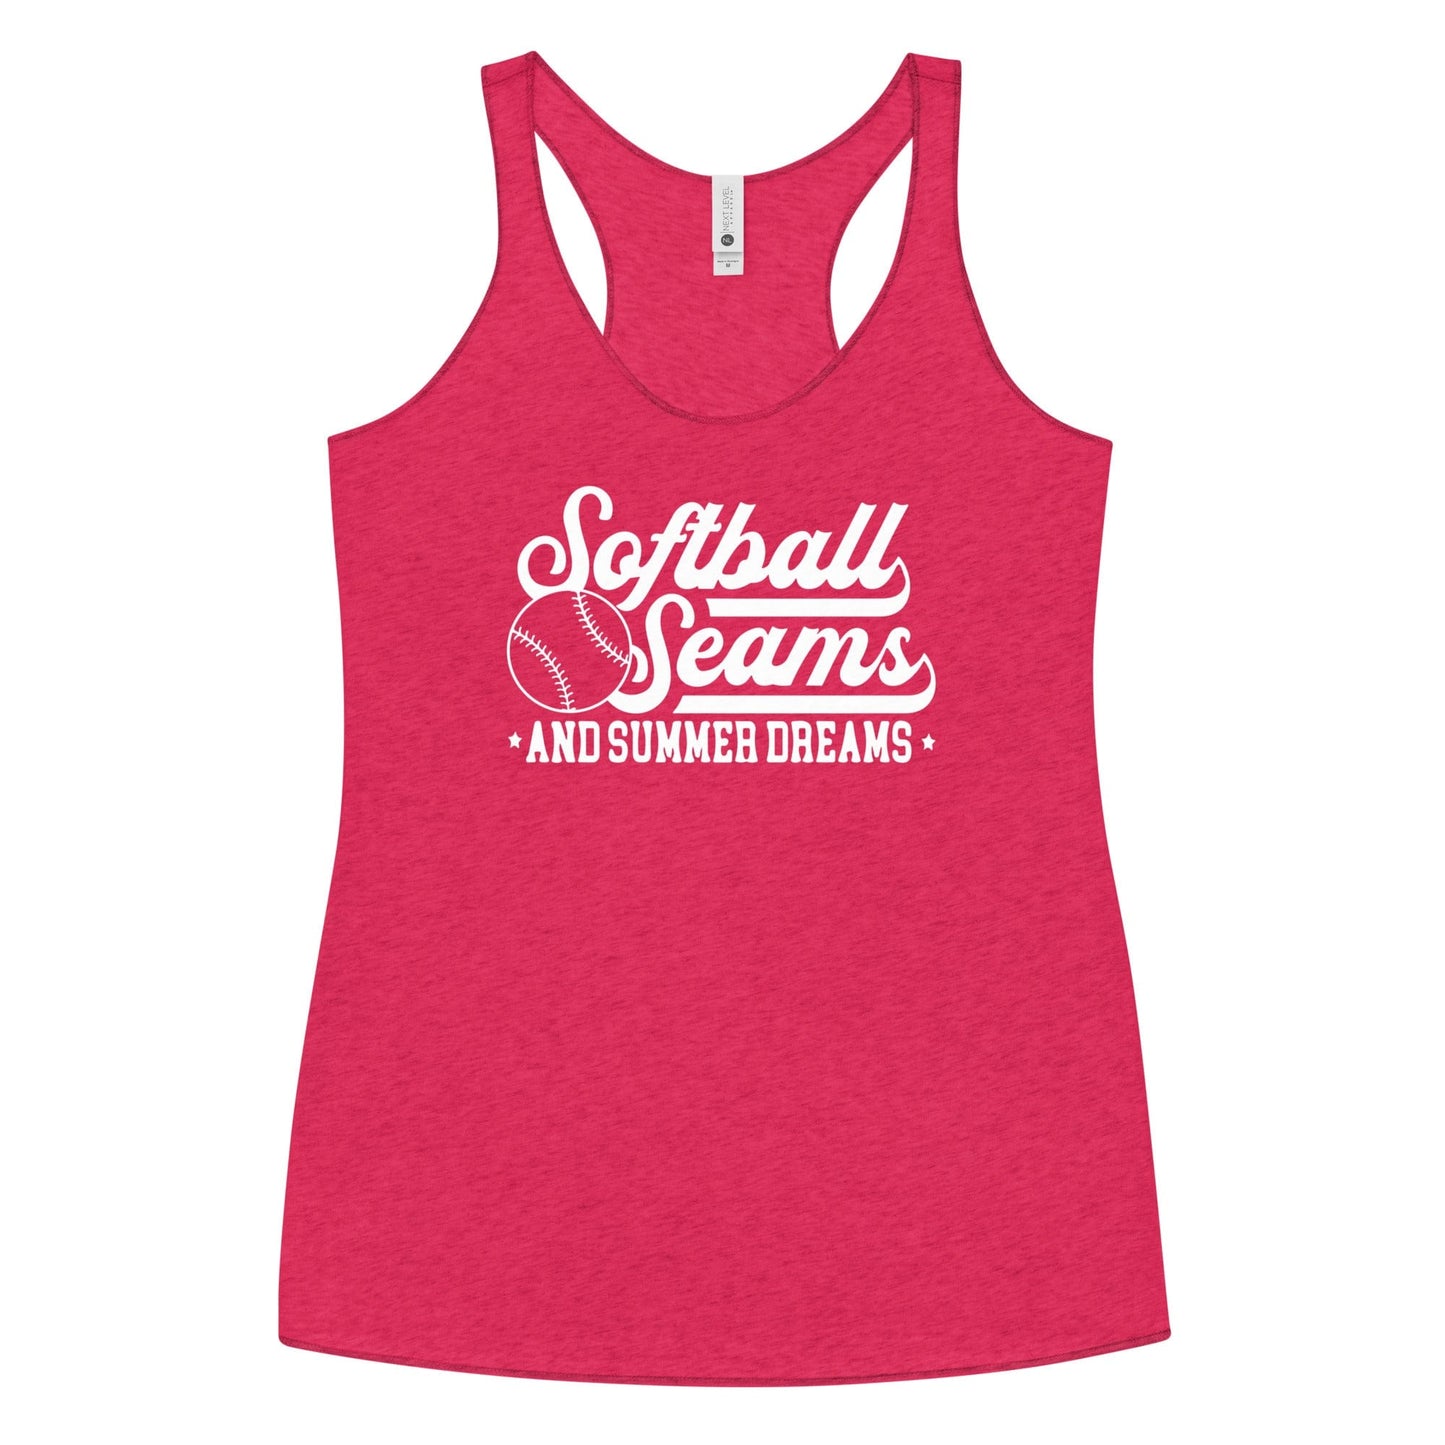 Softball Seams And Summer Dreams - Women's Racerback Tank